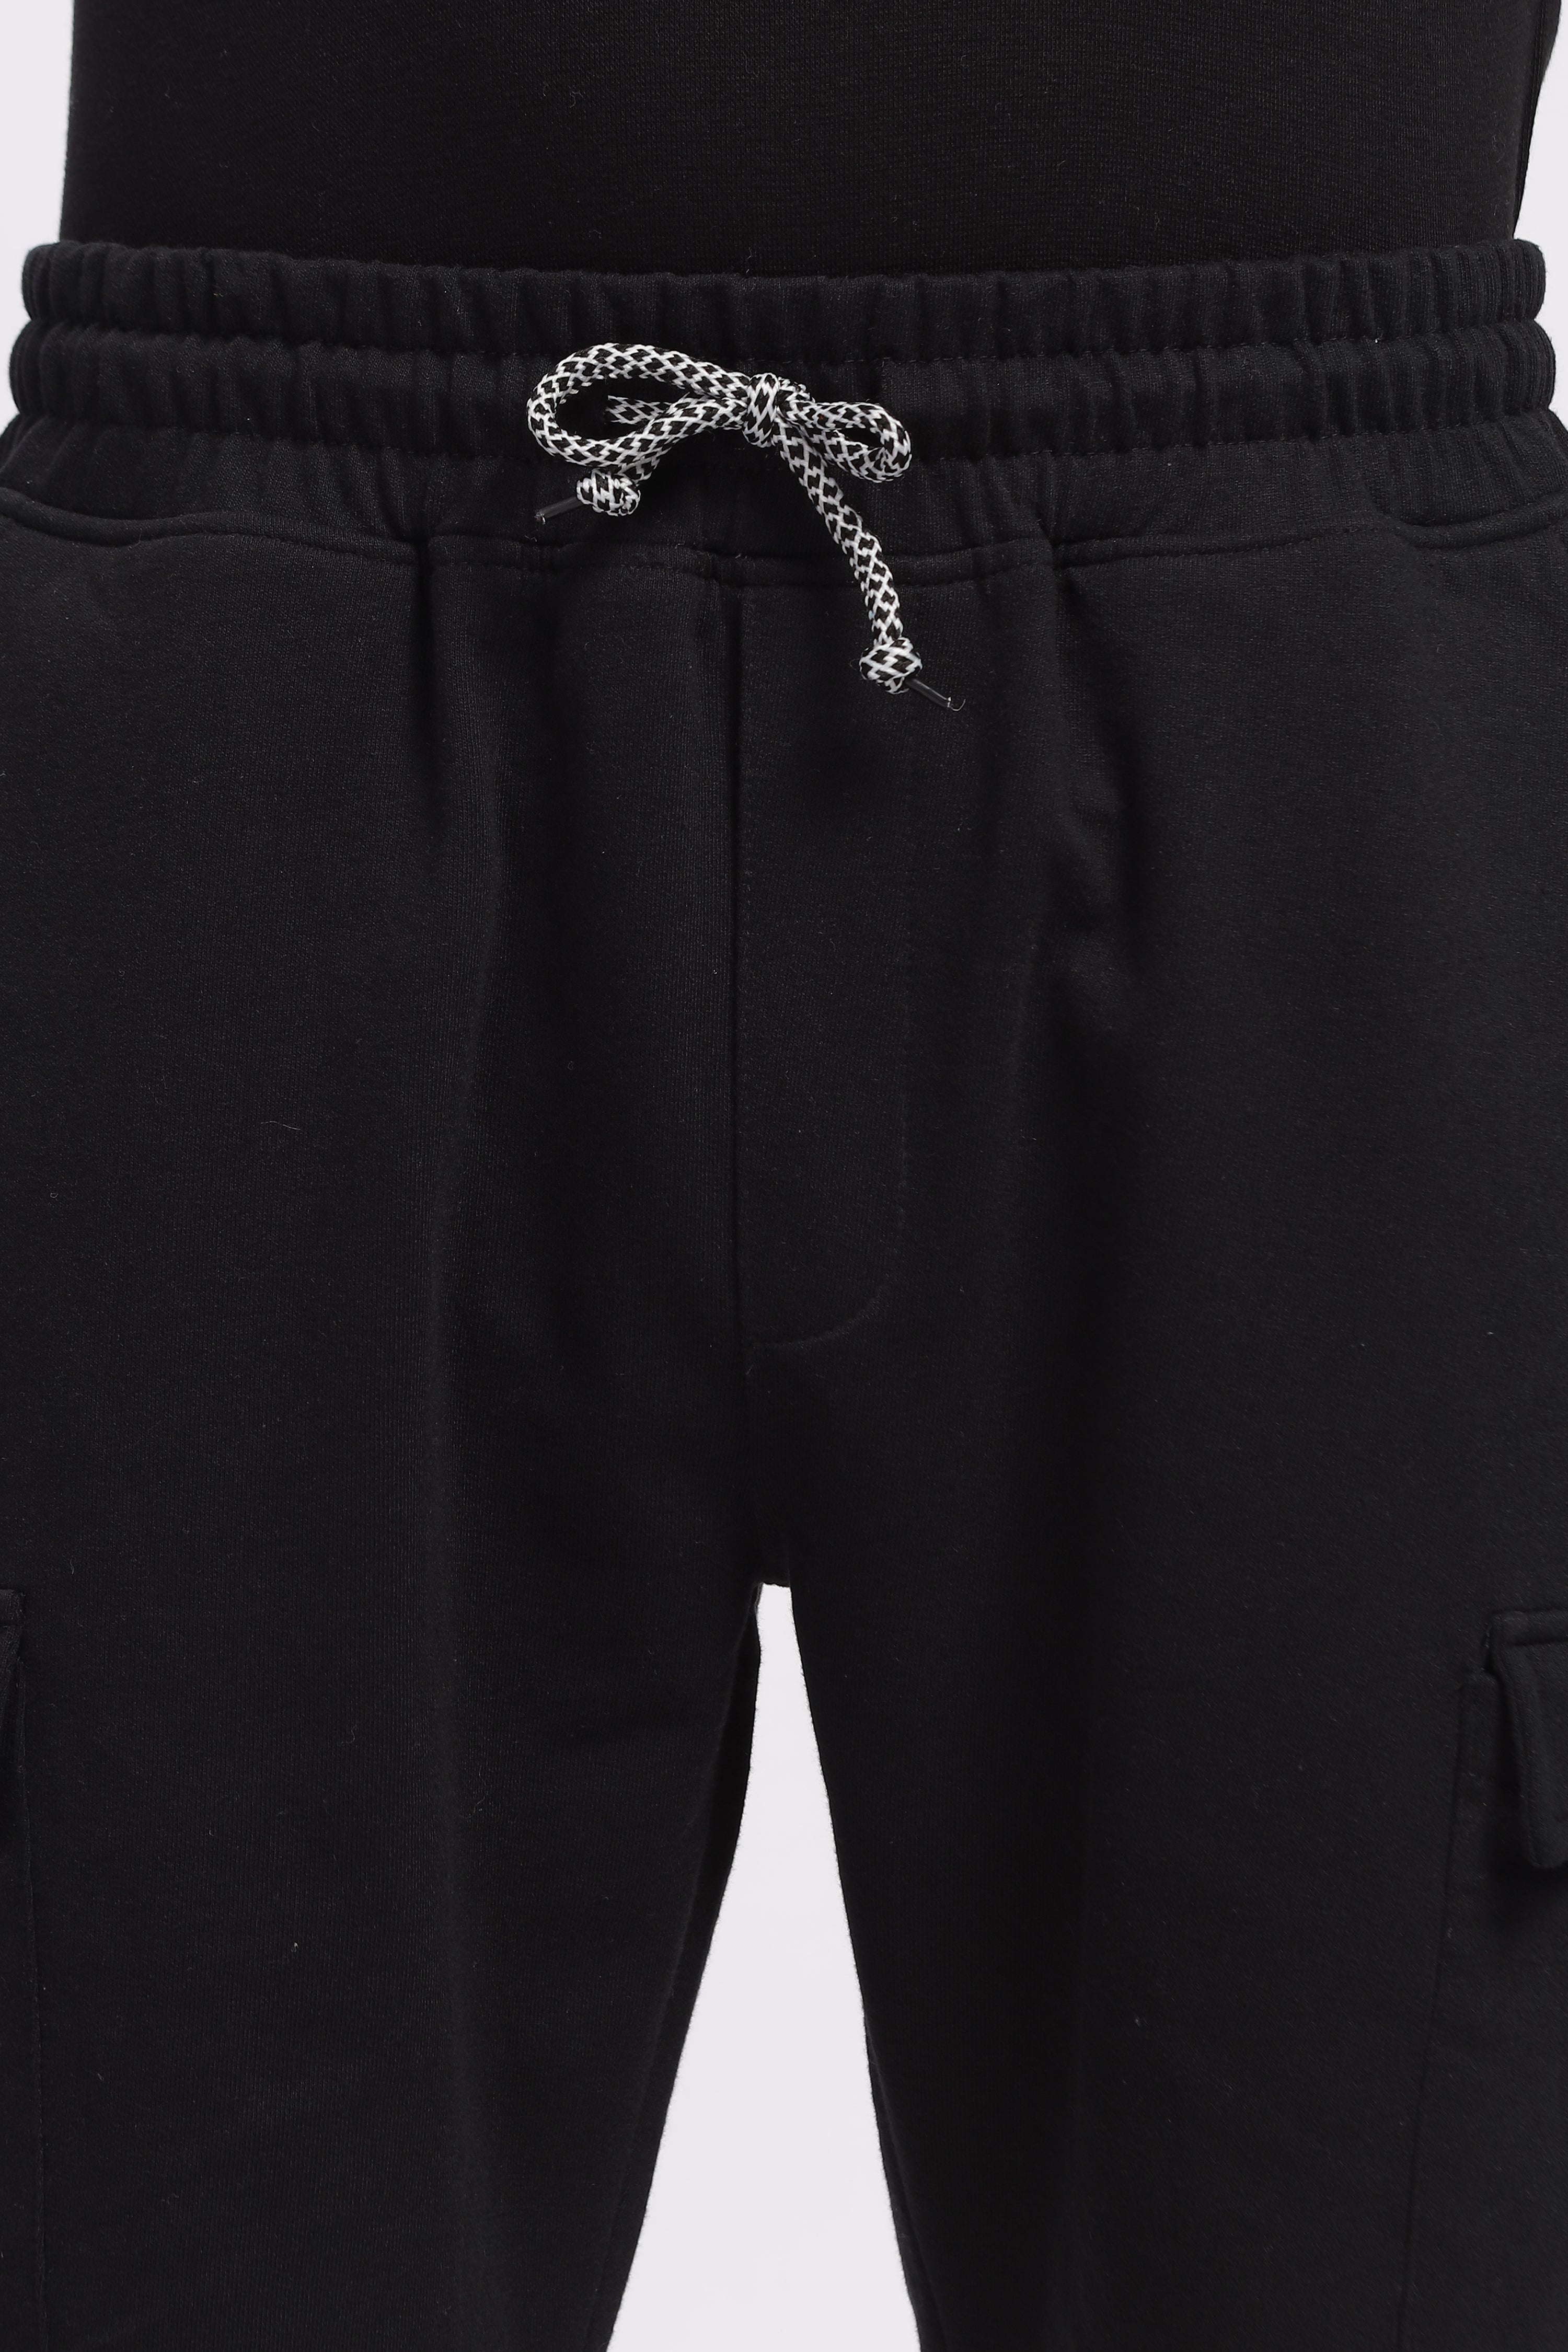 Black Premium Loop Knit Cotton Shorts